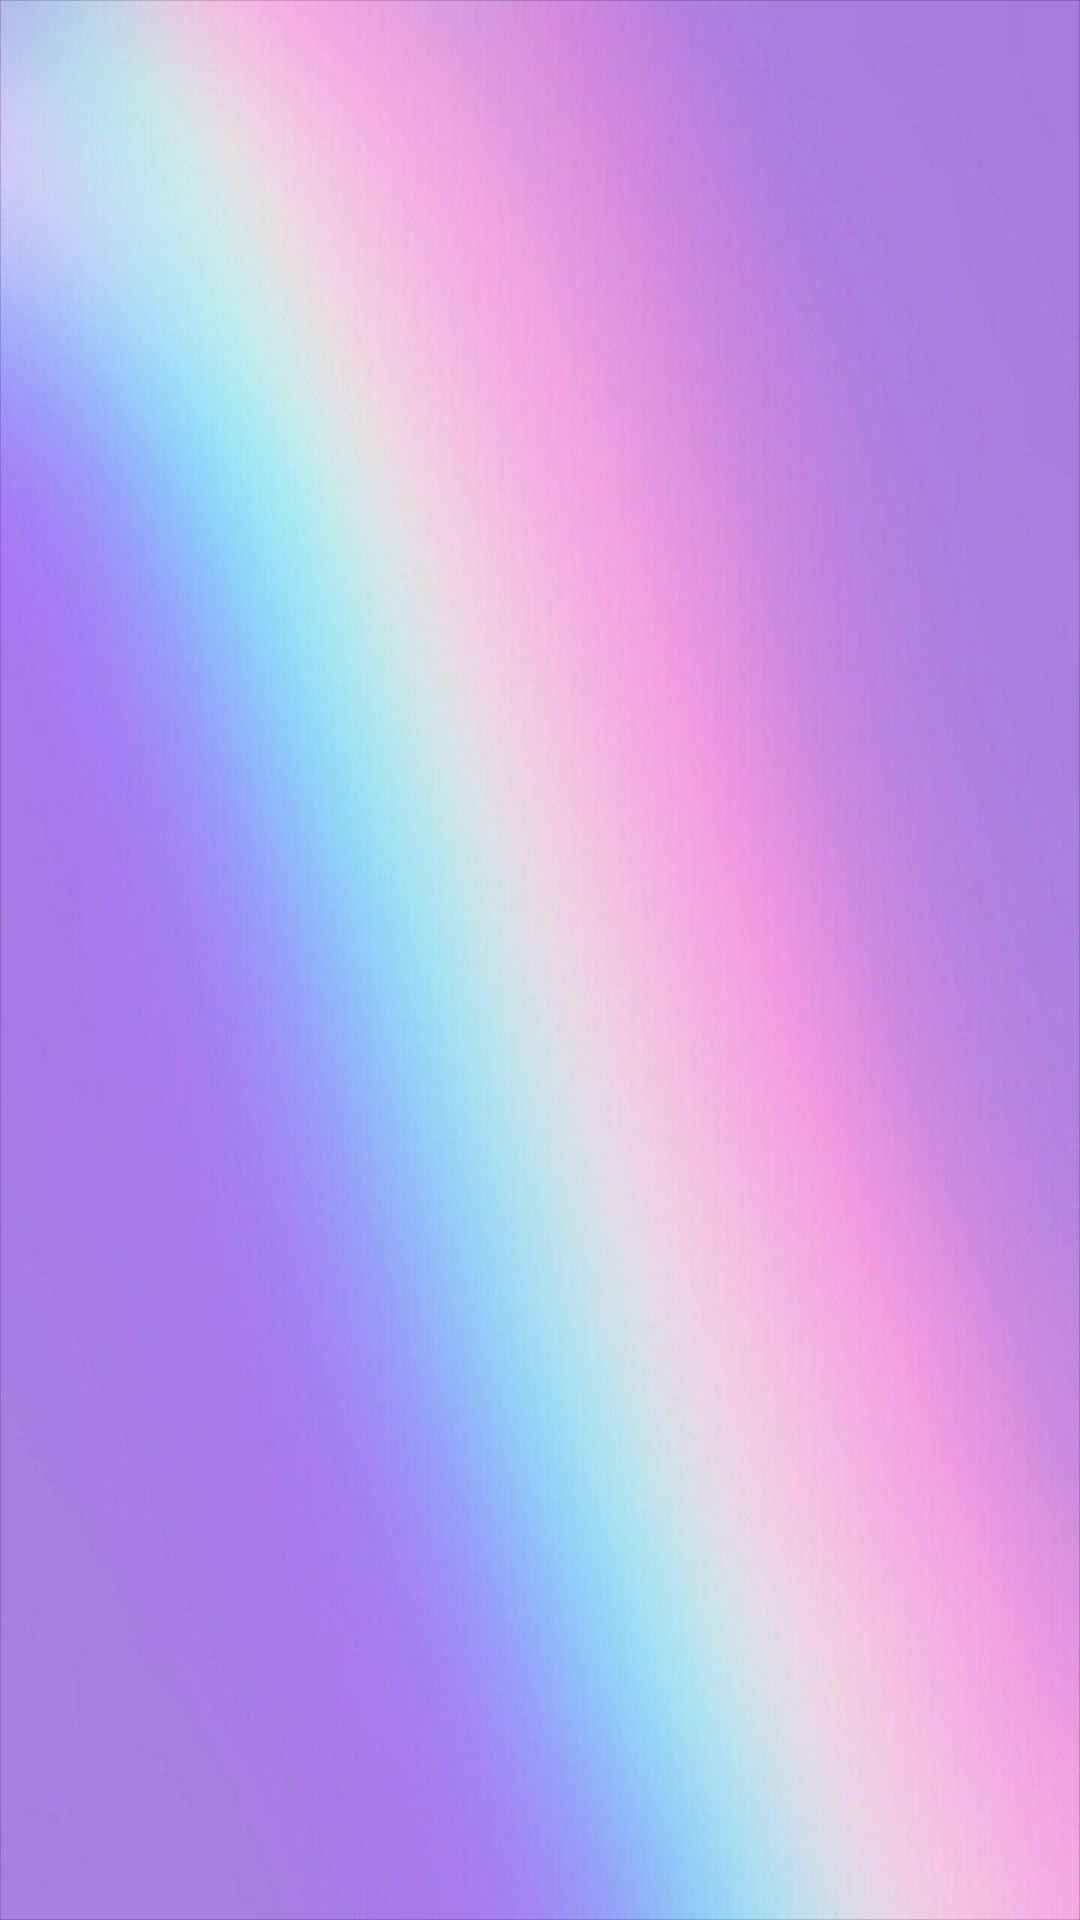 regenbogen iphone wallpaper,violett,lila,himmel,blau,tagsüber